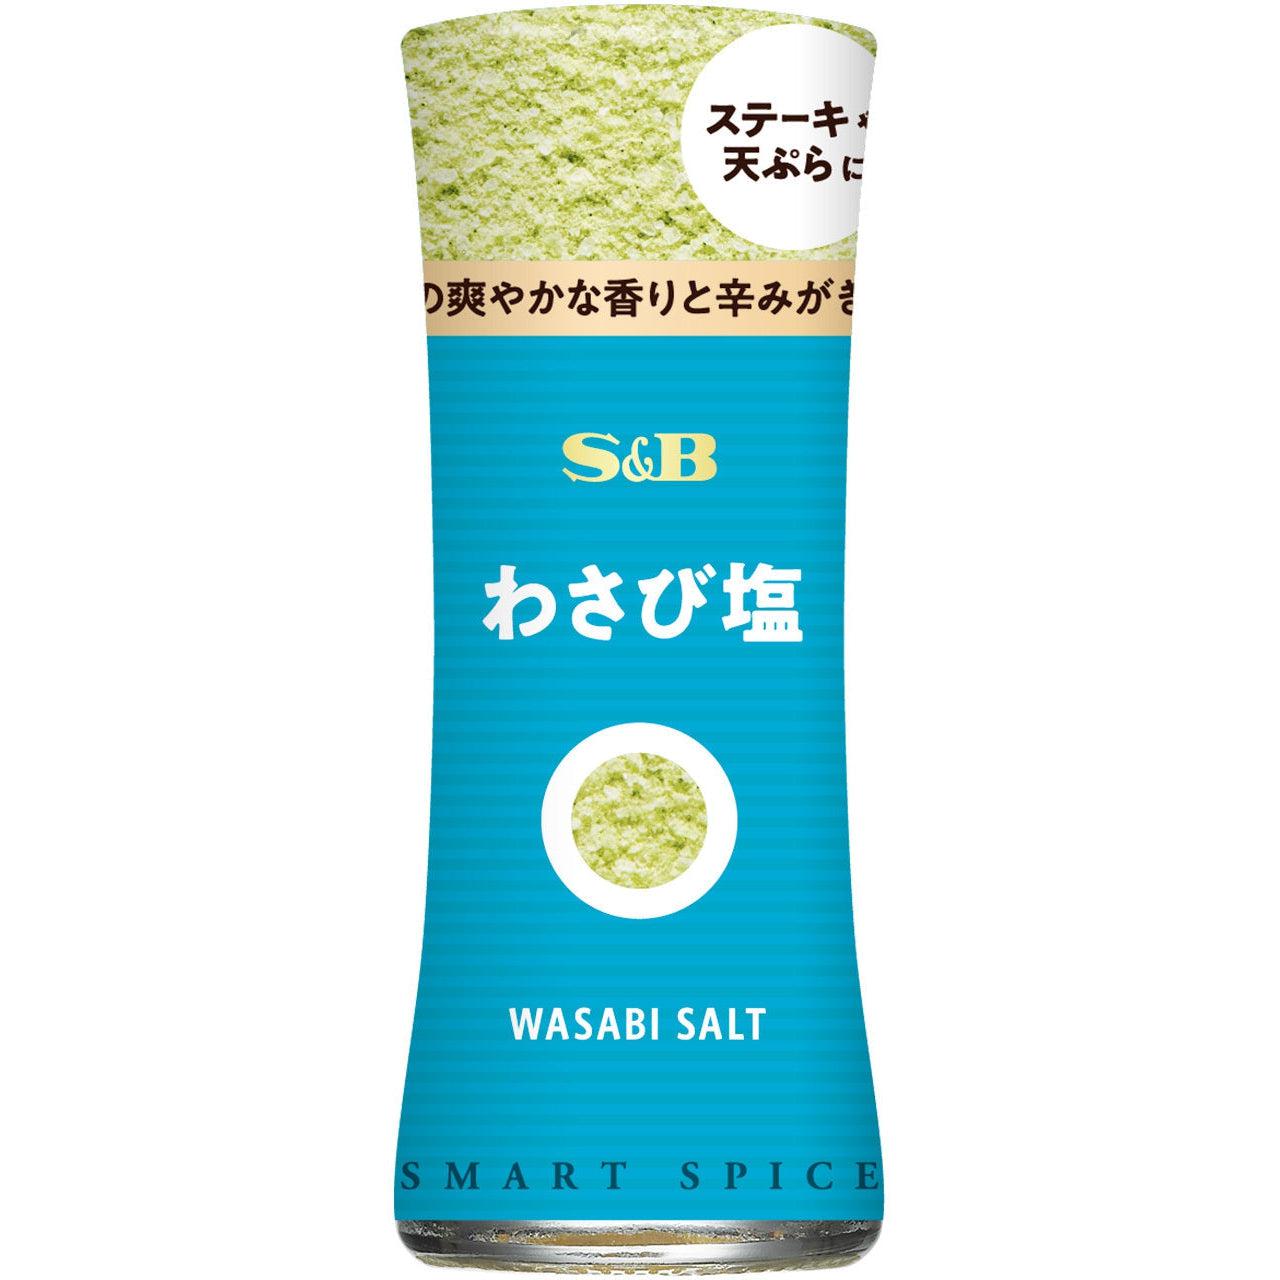 S&B Smart Spice Wasabi Salt 16g